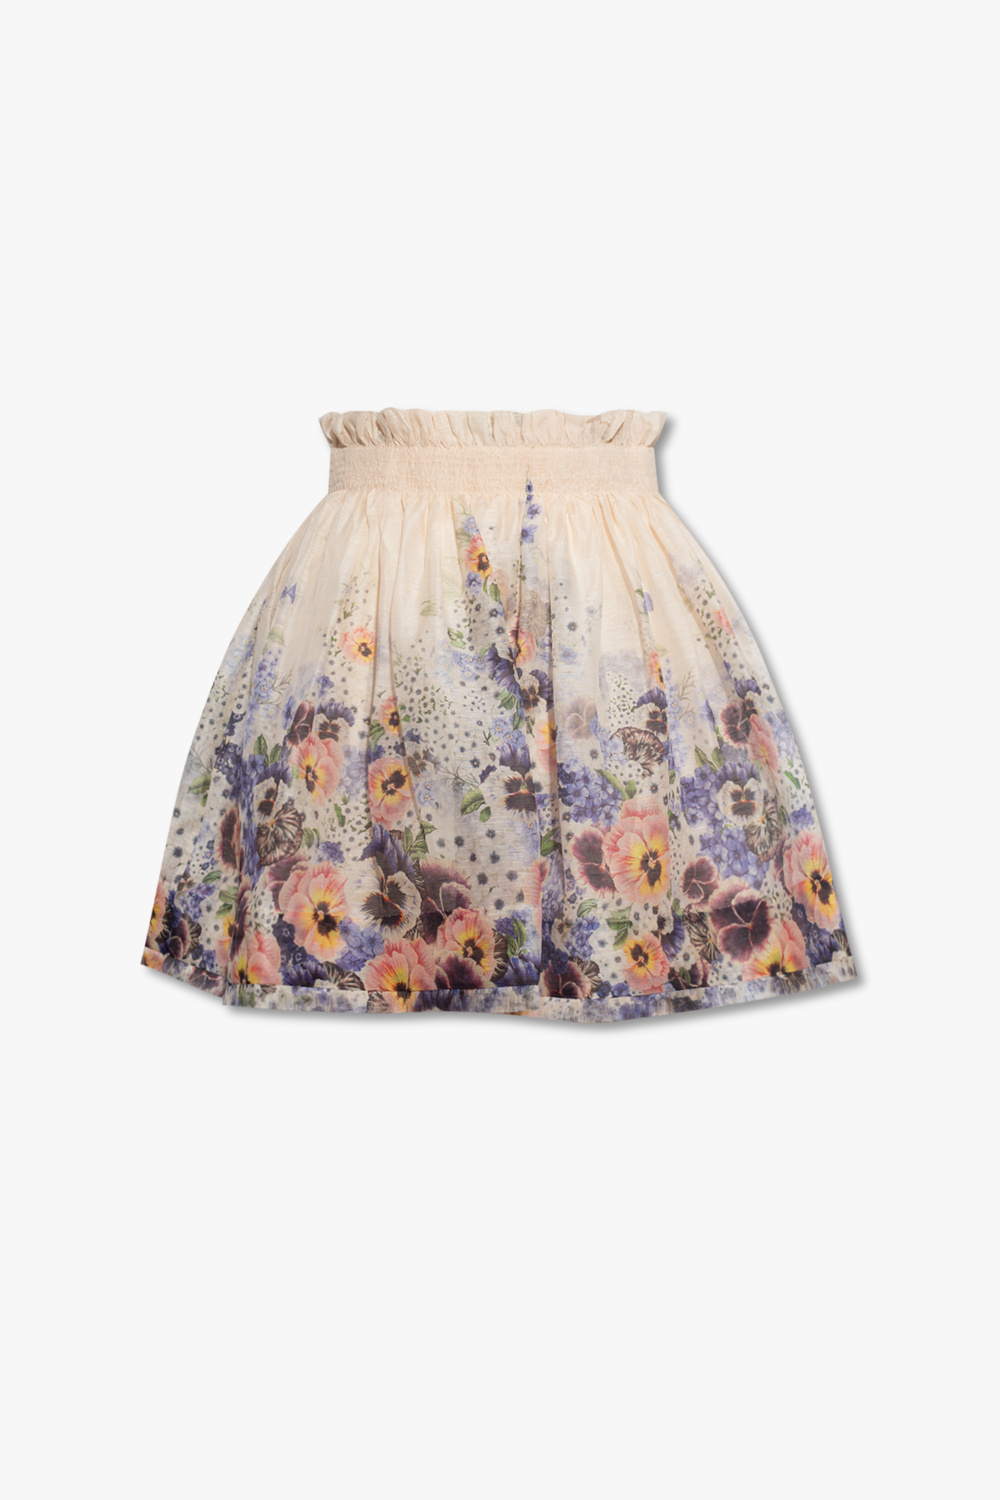 Zimmermann Floral skirt